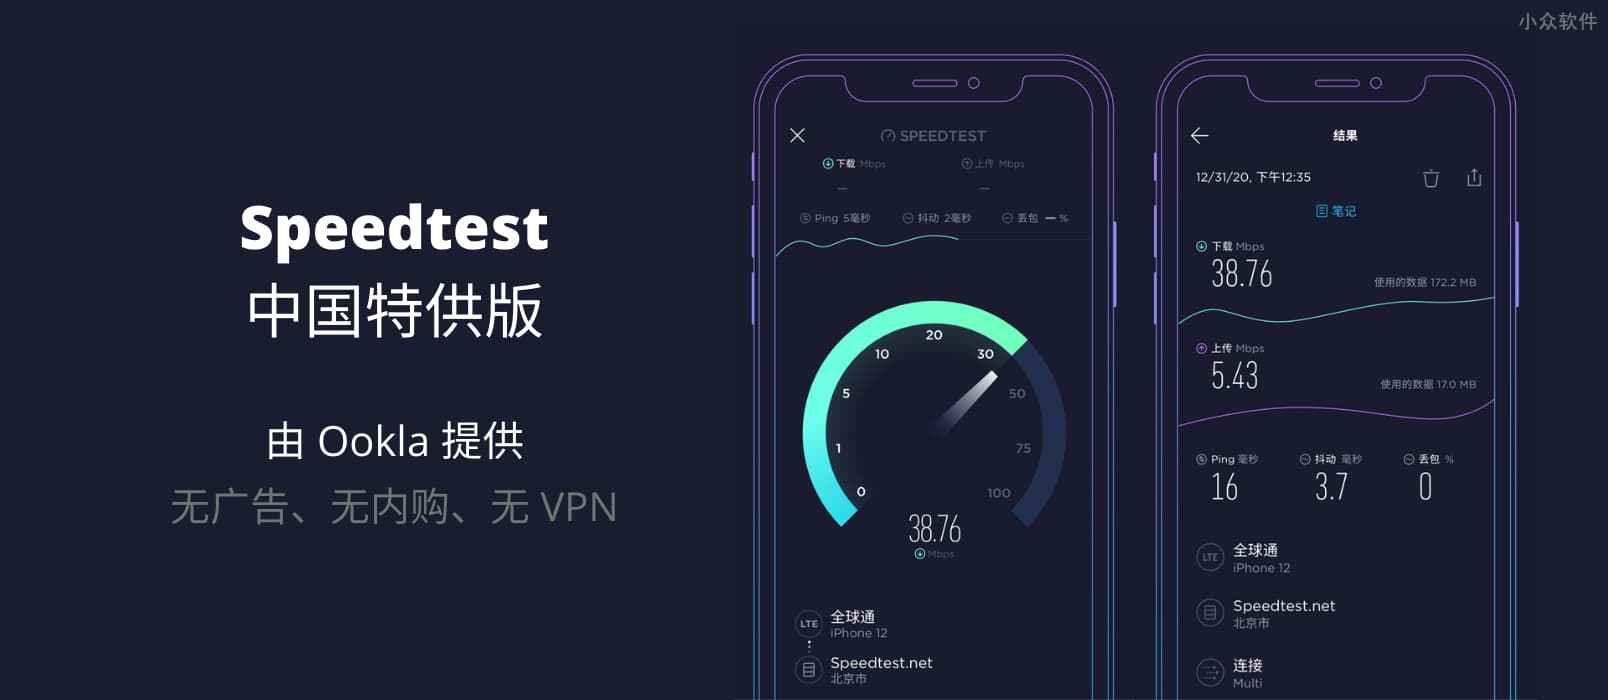 Speedtest 中国特供版正式上架 App Store：无广告、无内购、无 VPN，由 Ookla 提供的测速服务